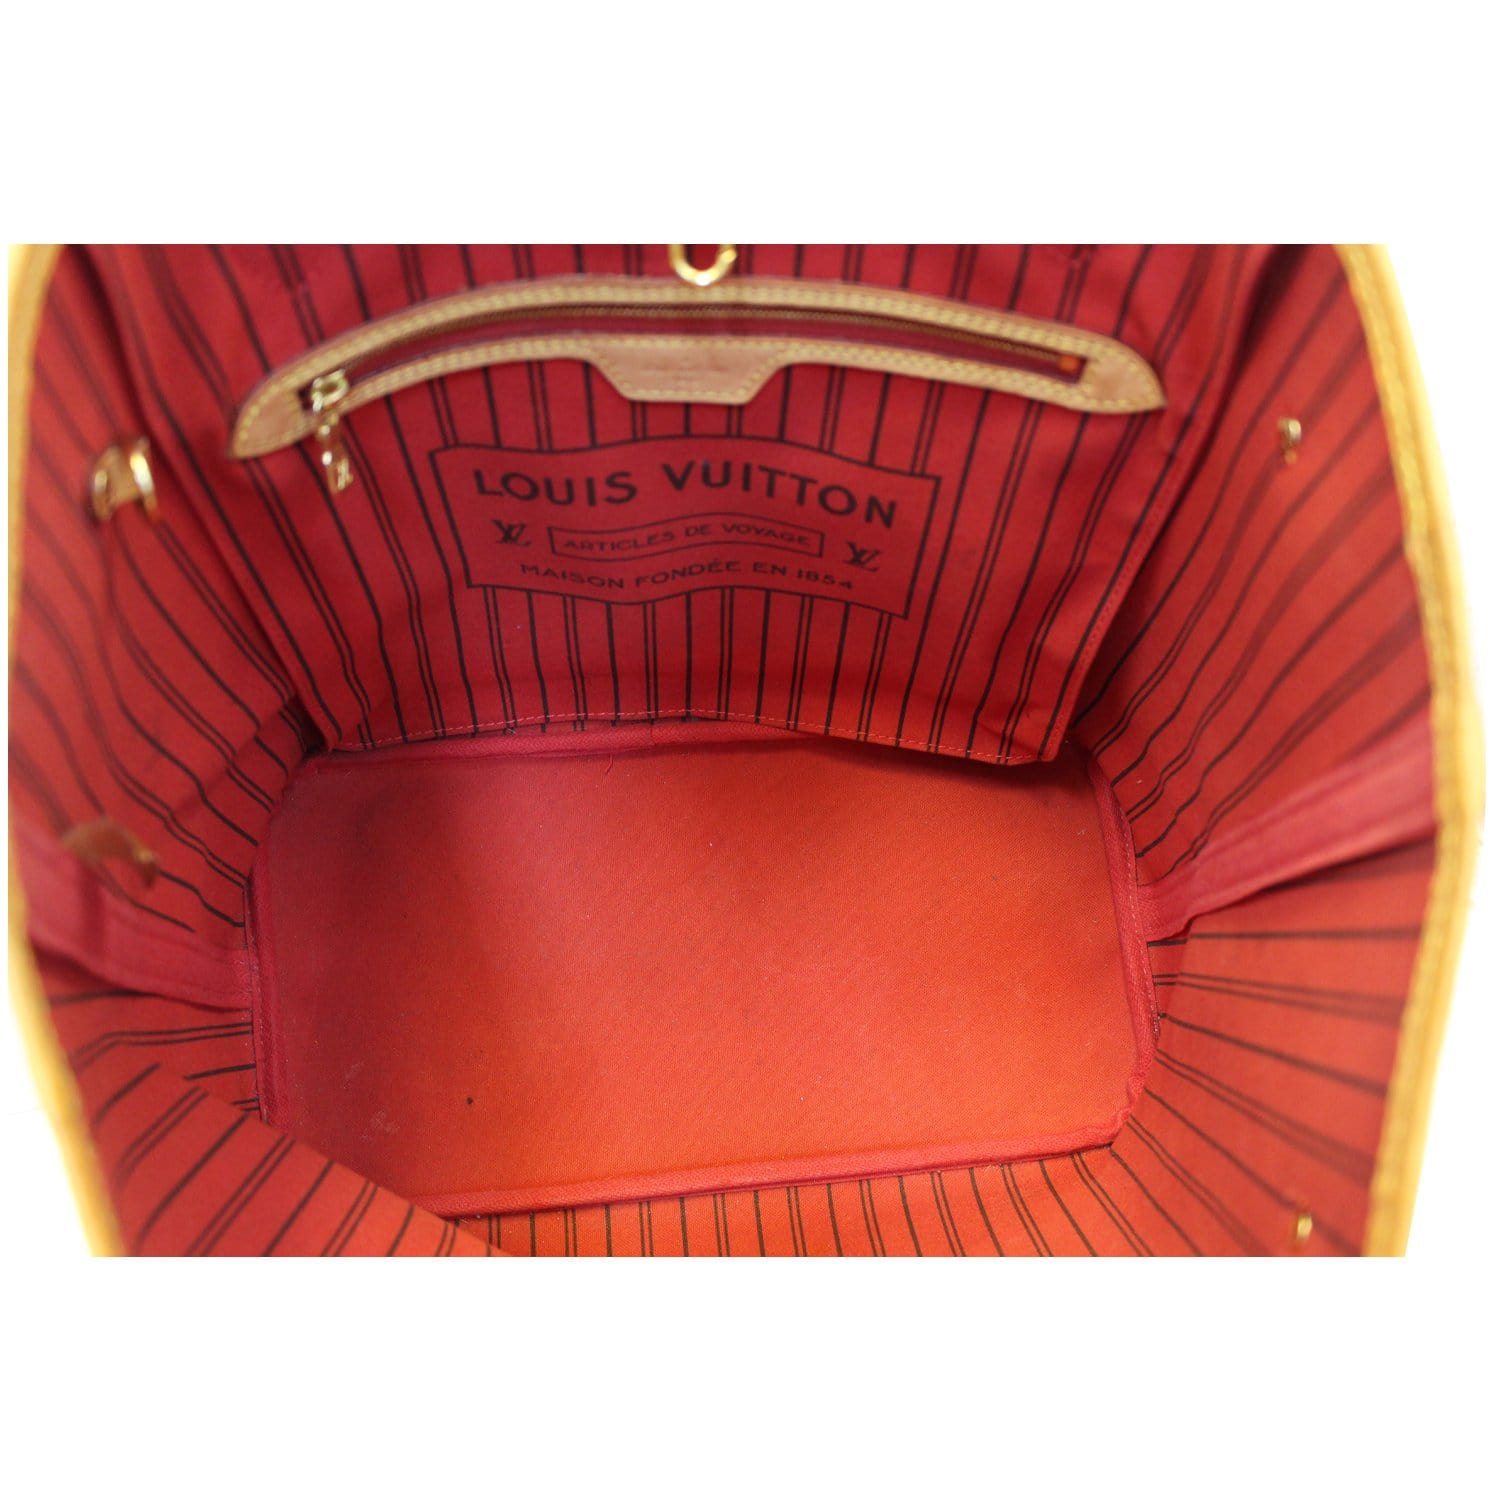 Louis Vuitton neverfull MM red inside.